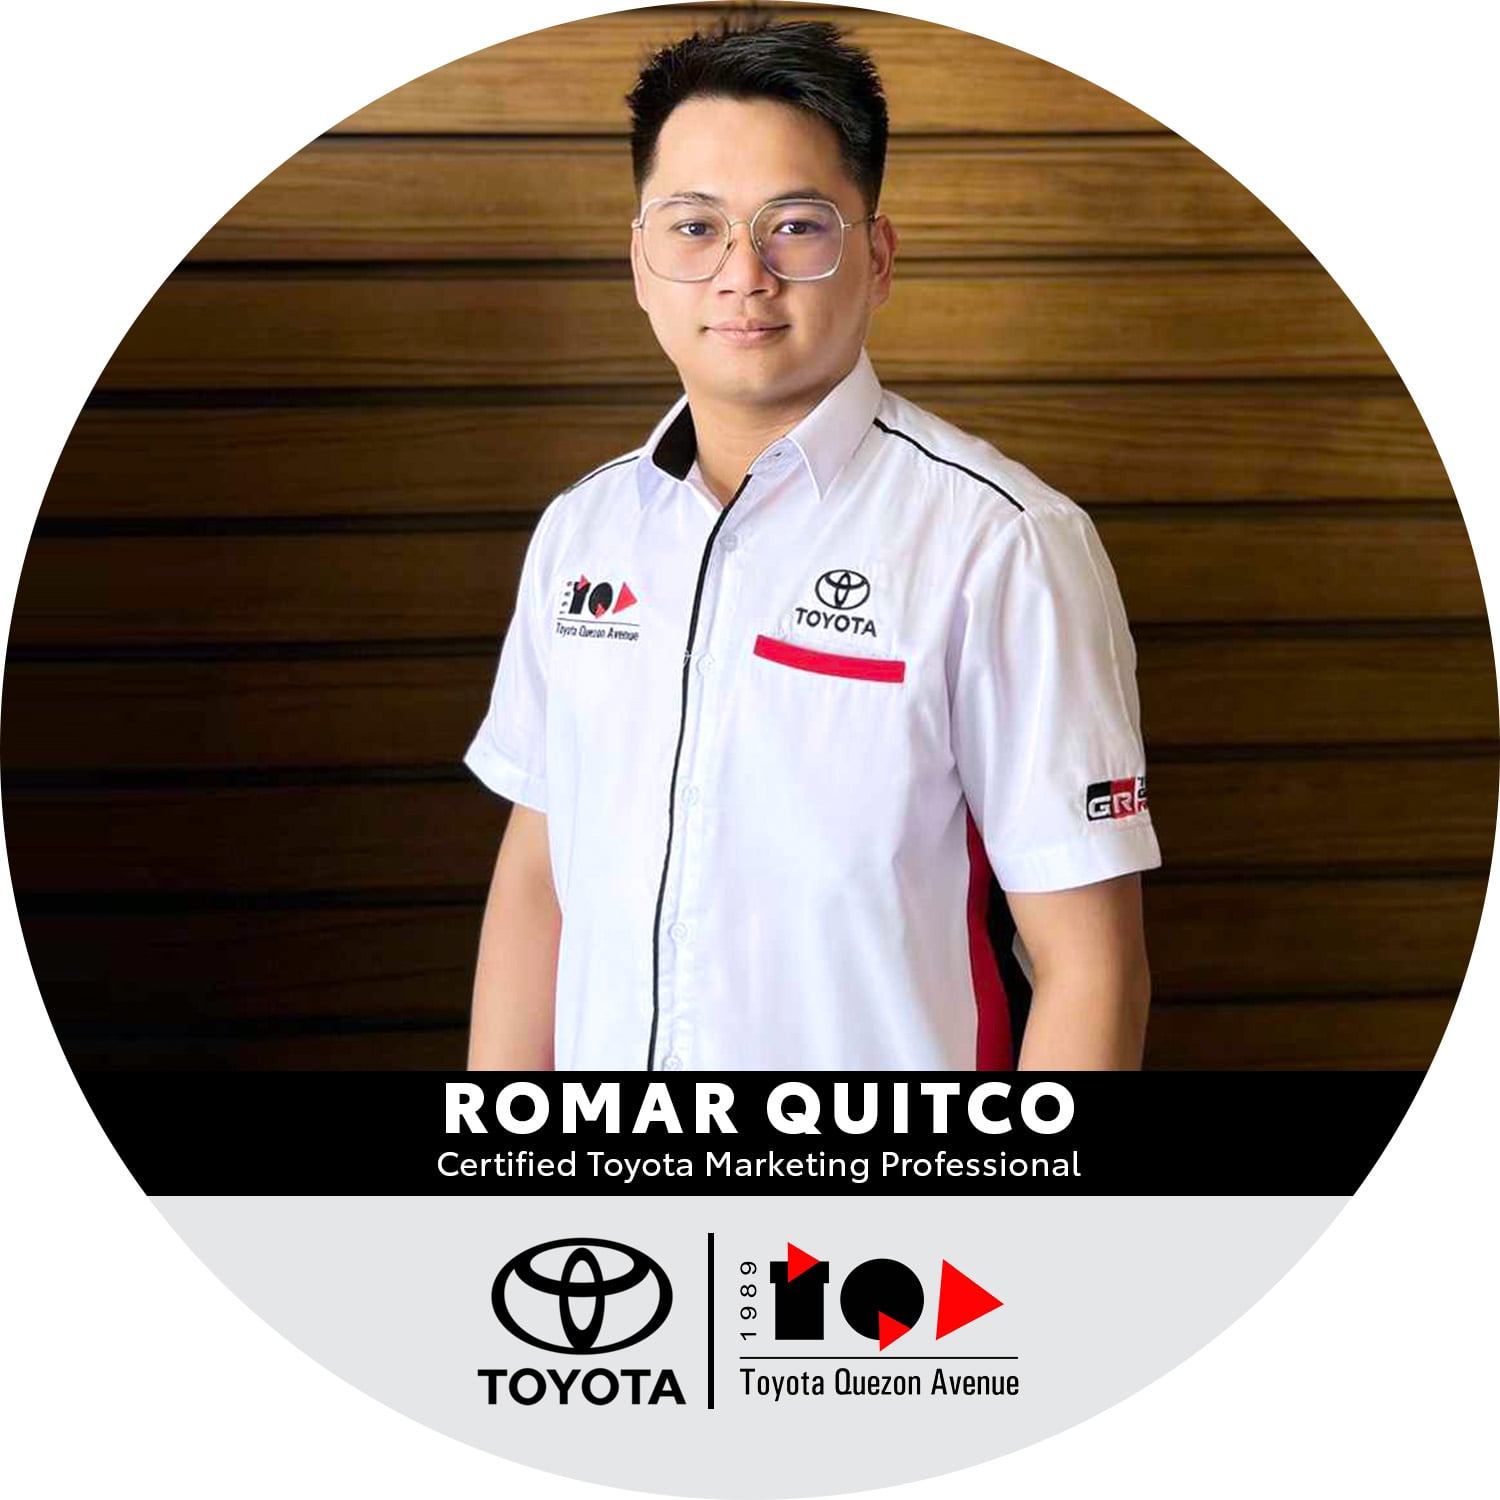 Certified Toyota Marketing Professionals - Romar Quitco